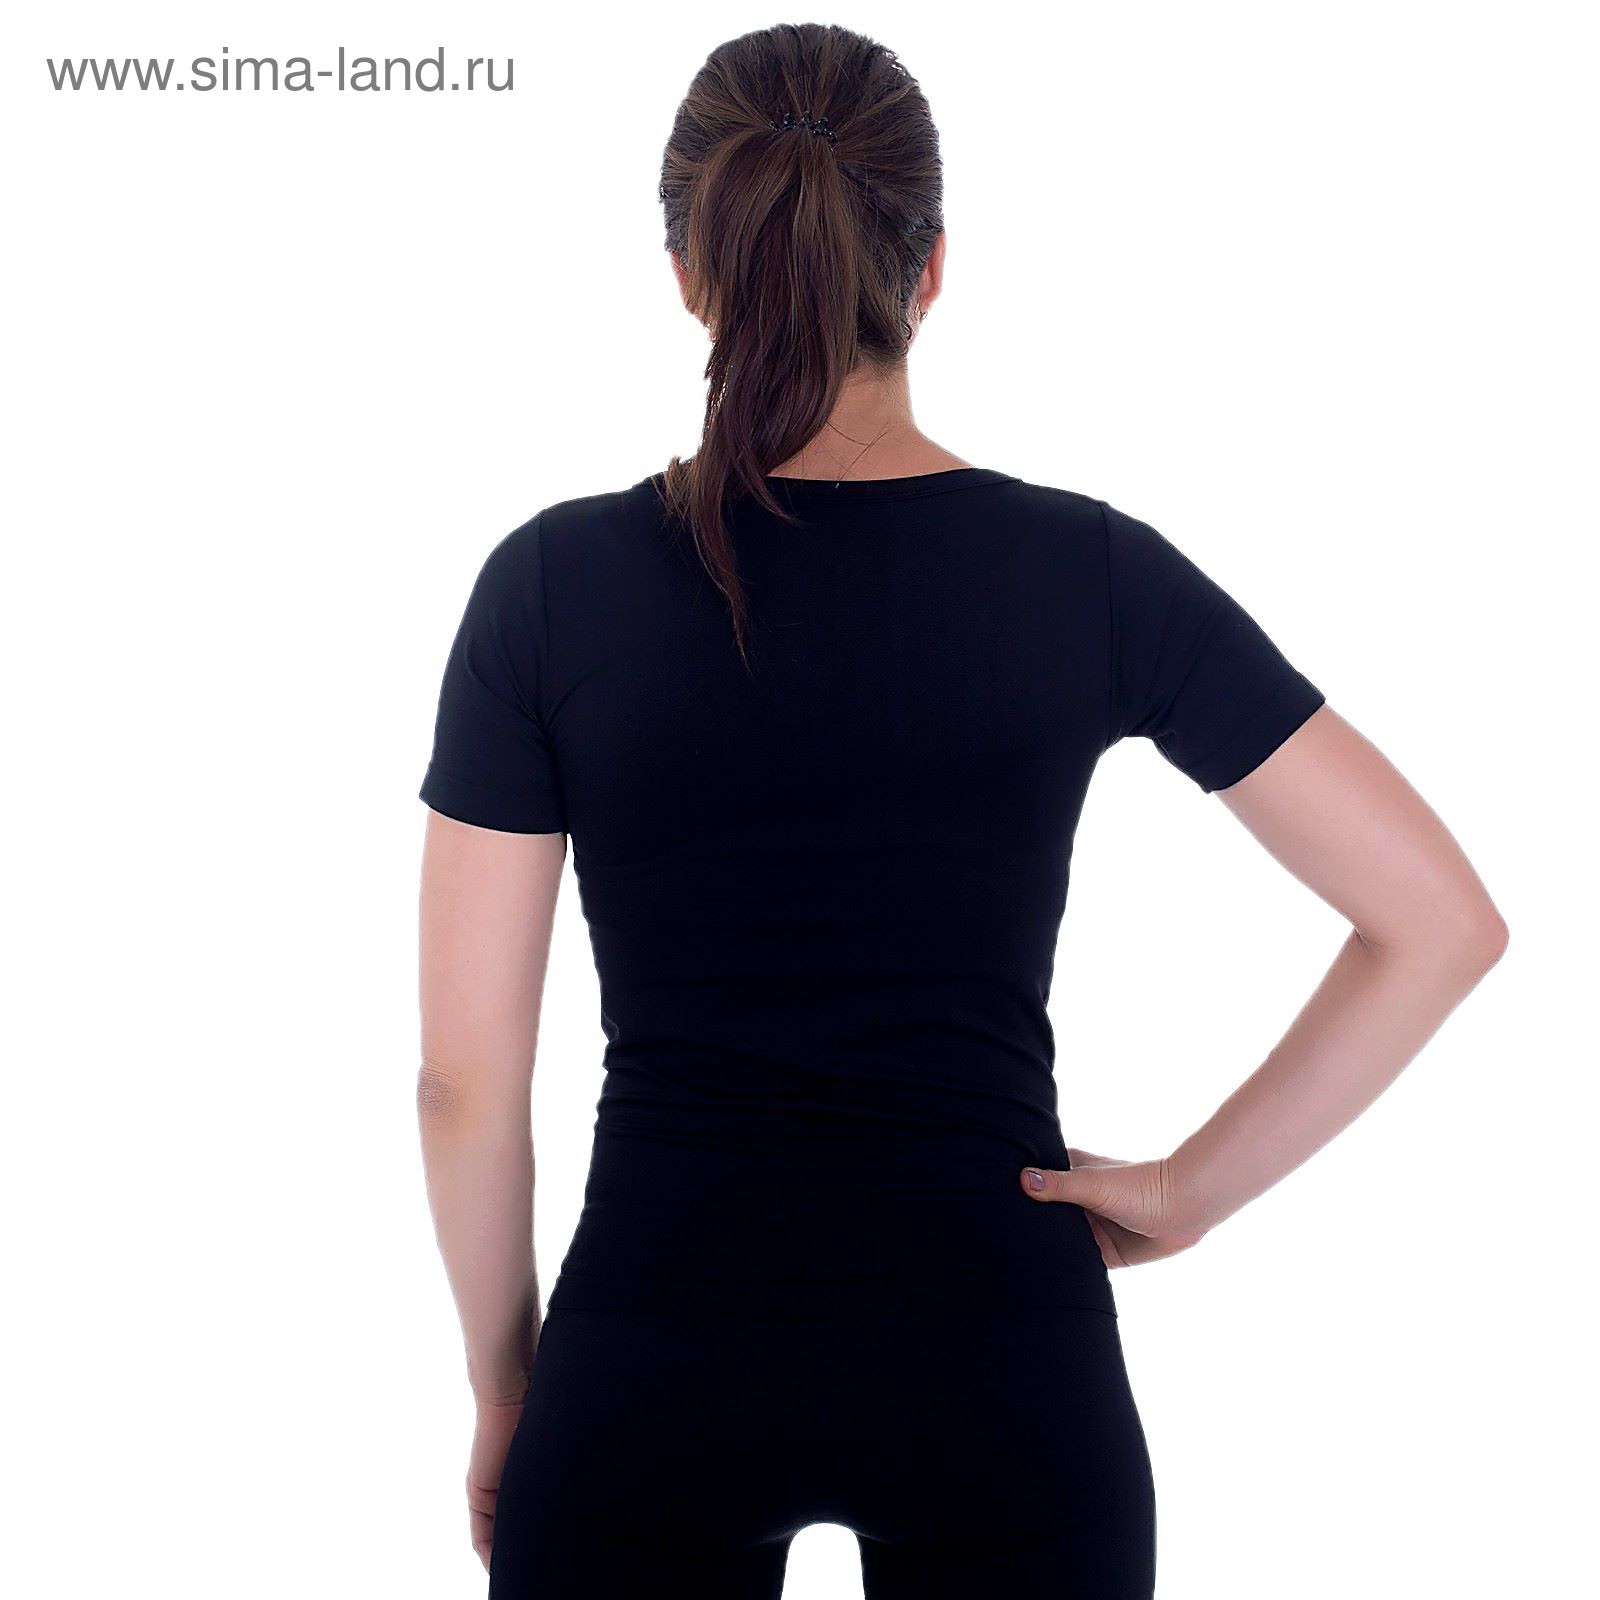 Спортивная футболка ONLITOP Balance black, размер S-M (42-44)